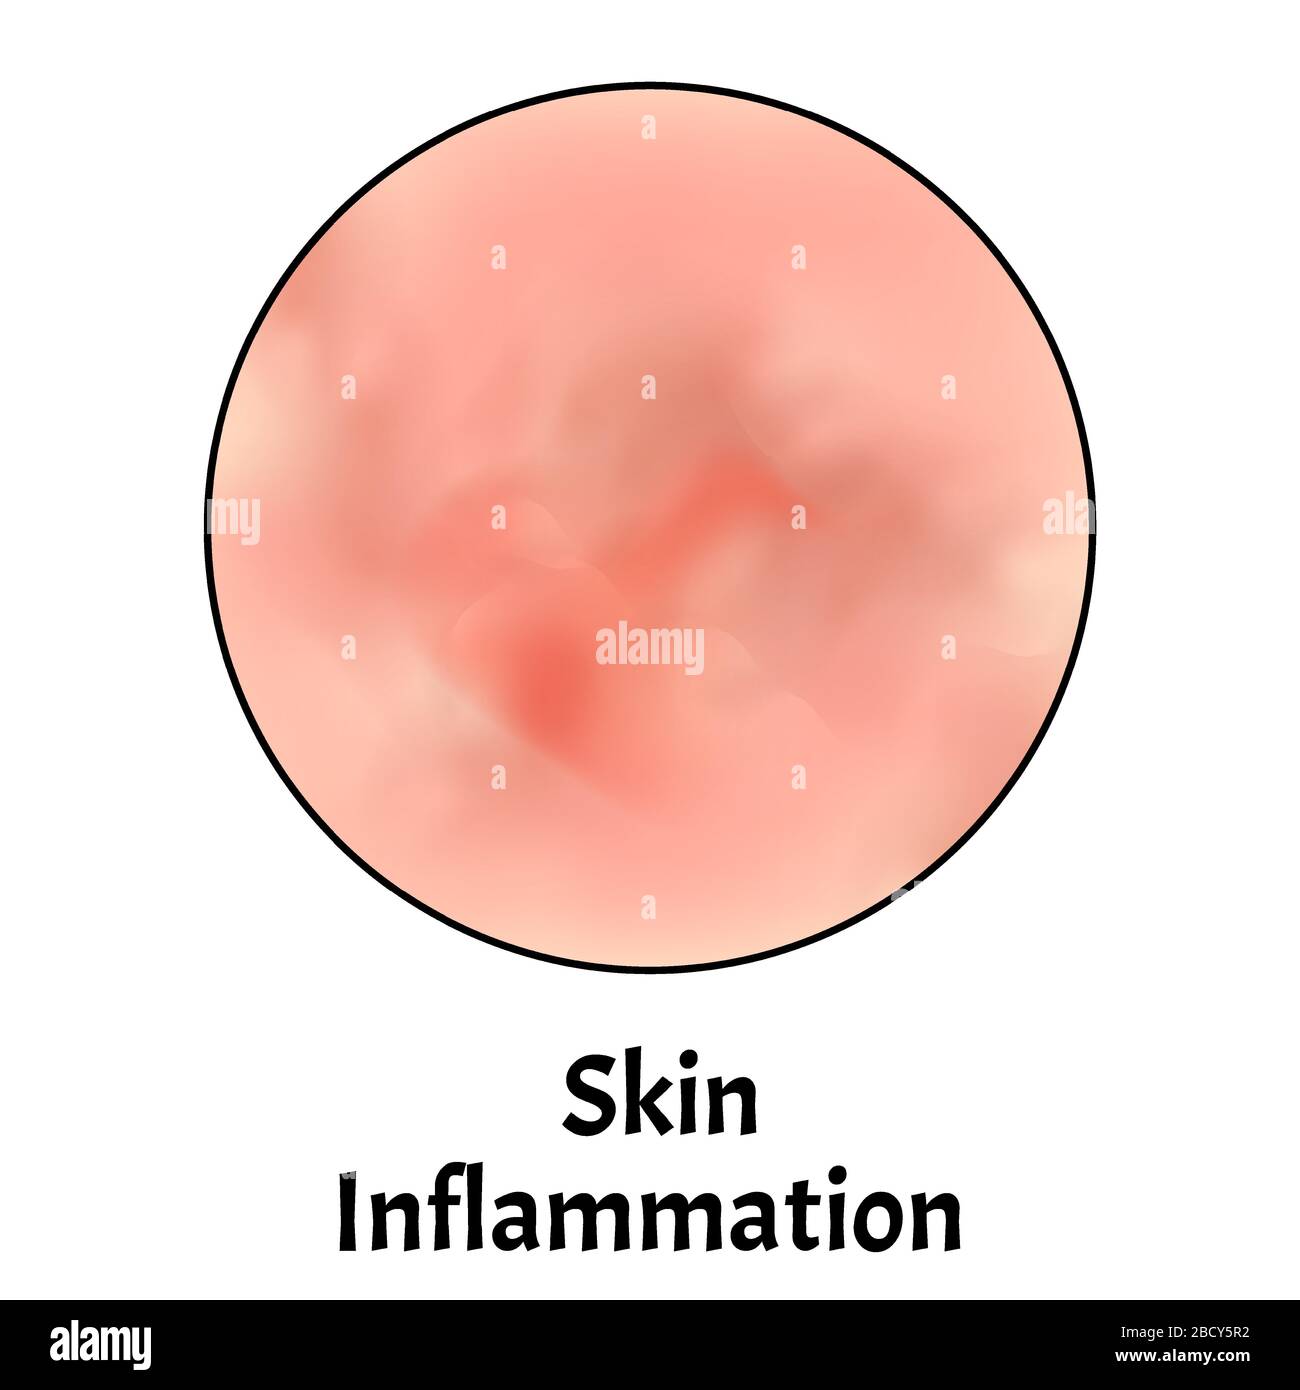 Skin inflammation. Dermatitis skin. Infographics. Vector illustration on isolated background. Stock Vector